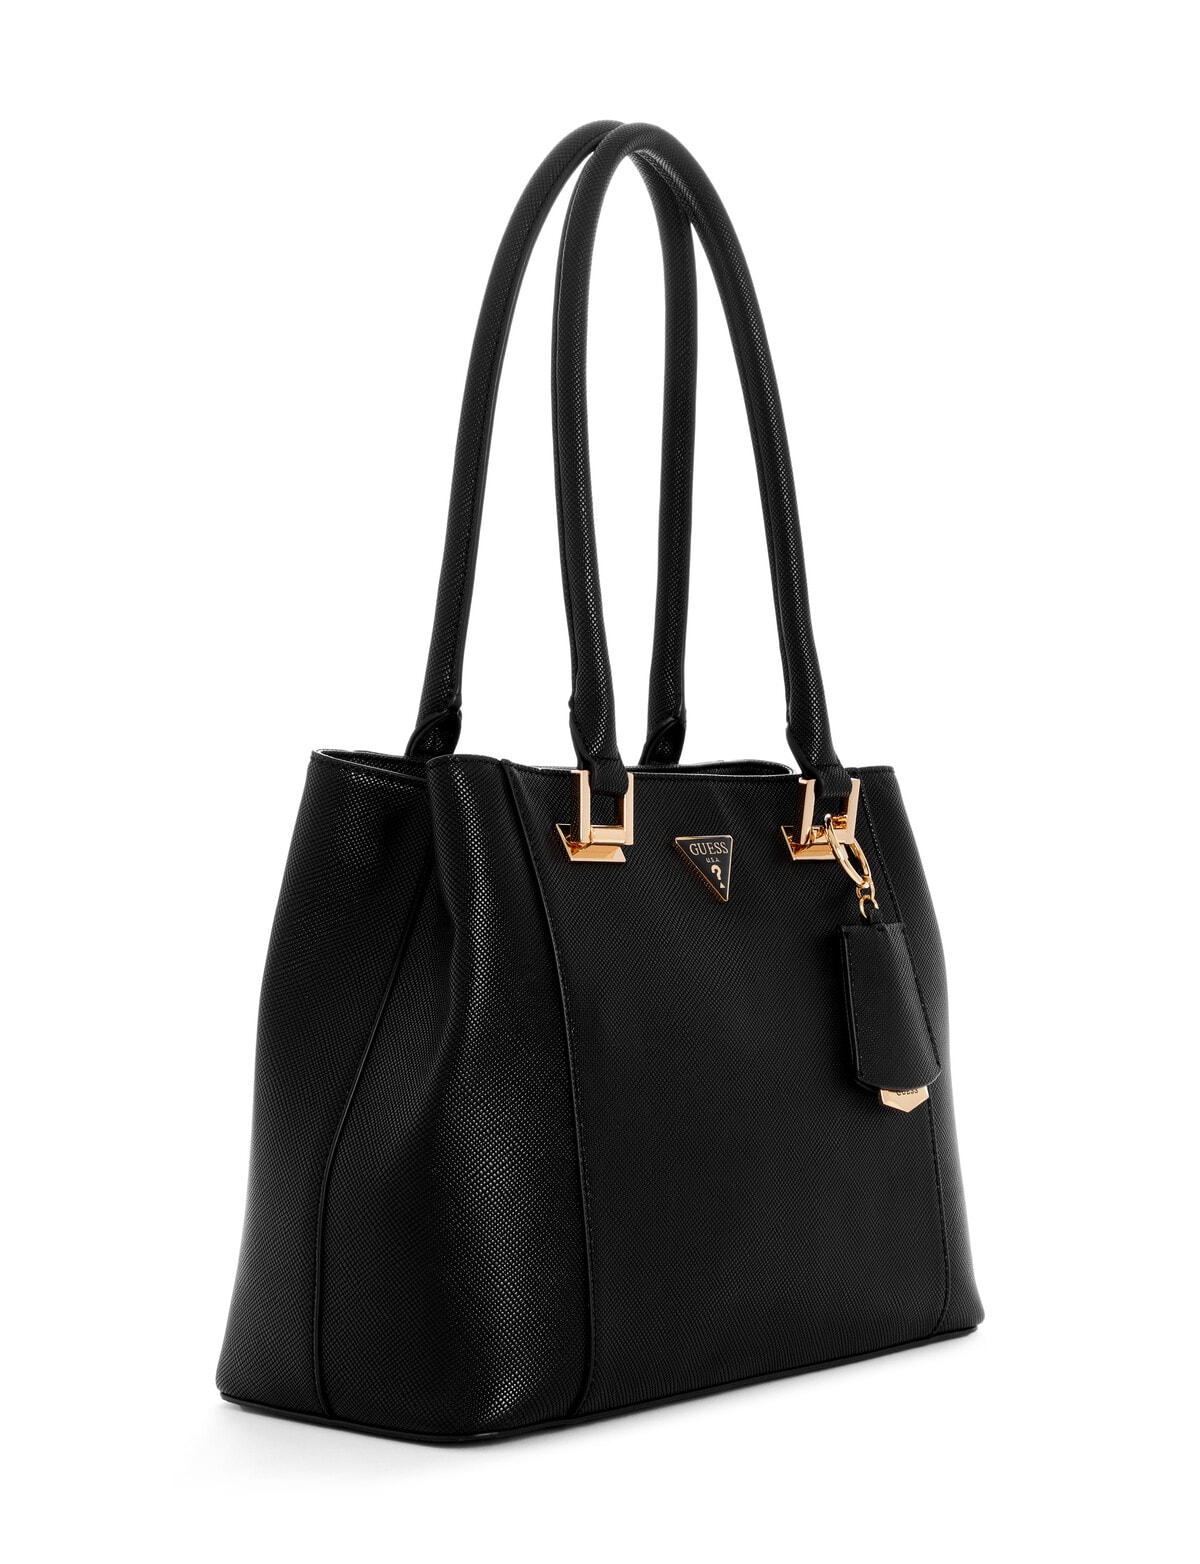 Guess Breana Shopper, Black - Handbags